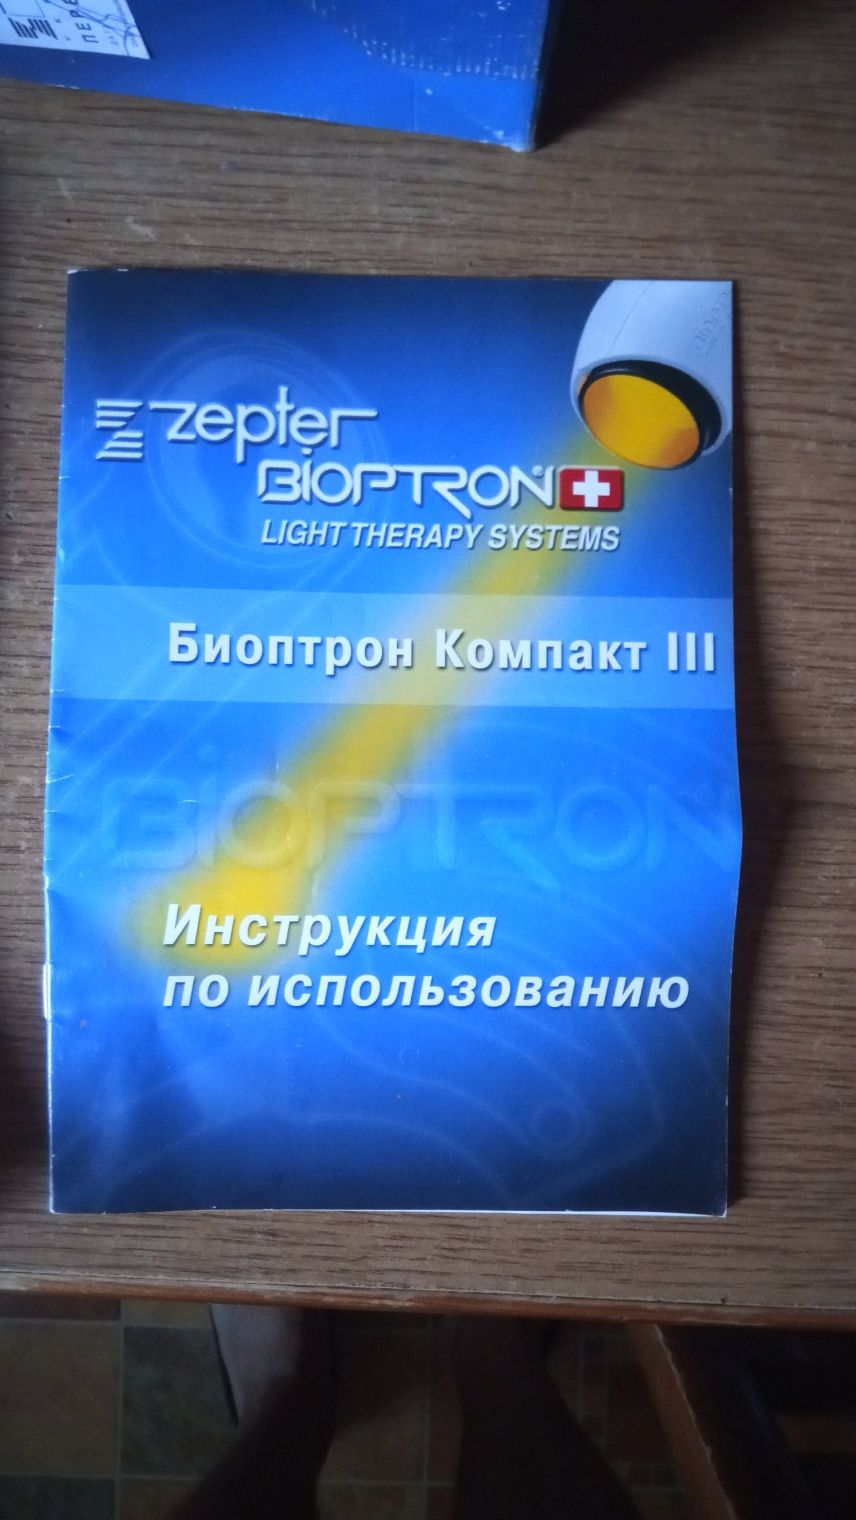 Bioptron от фирмы zepter